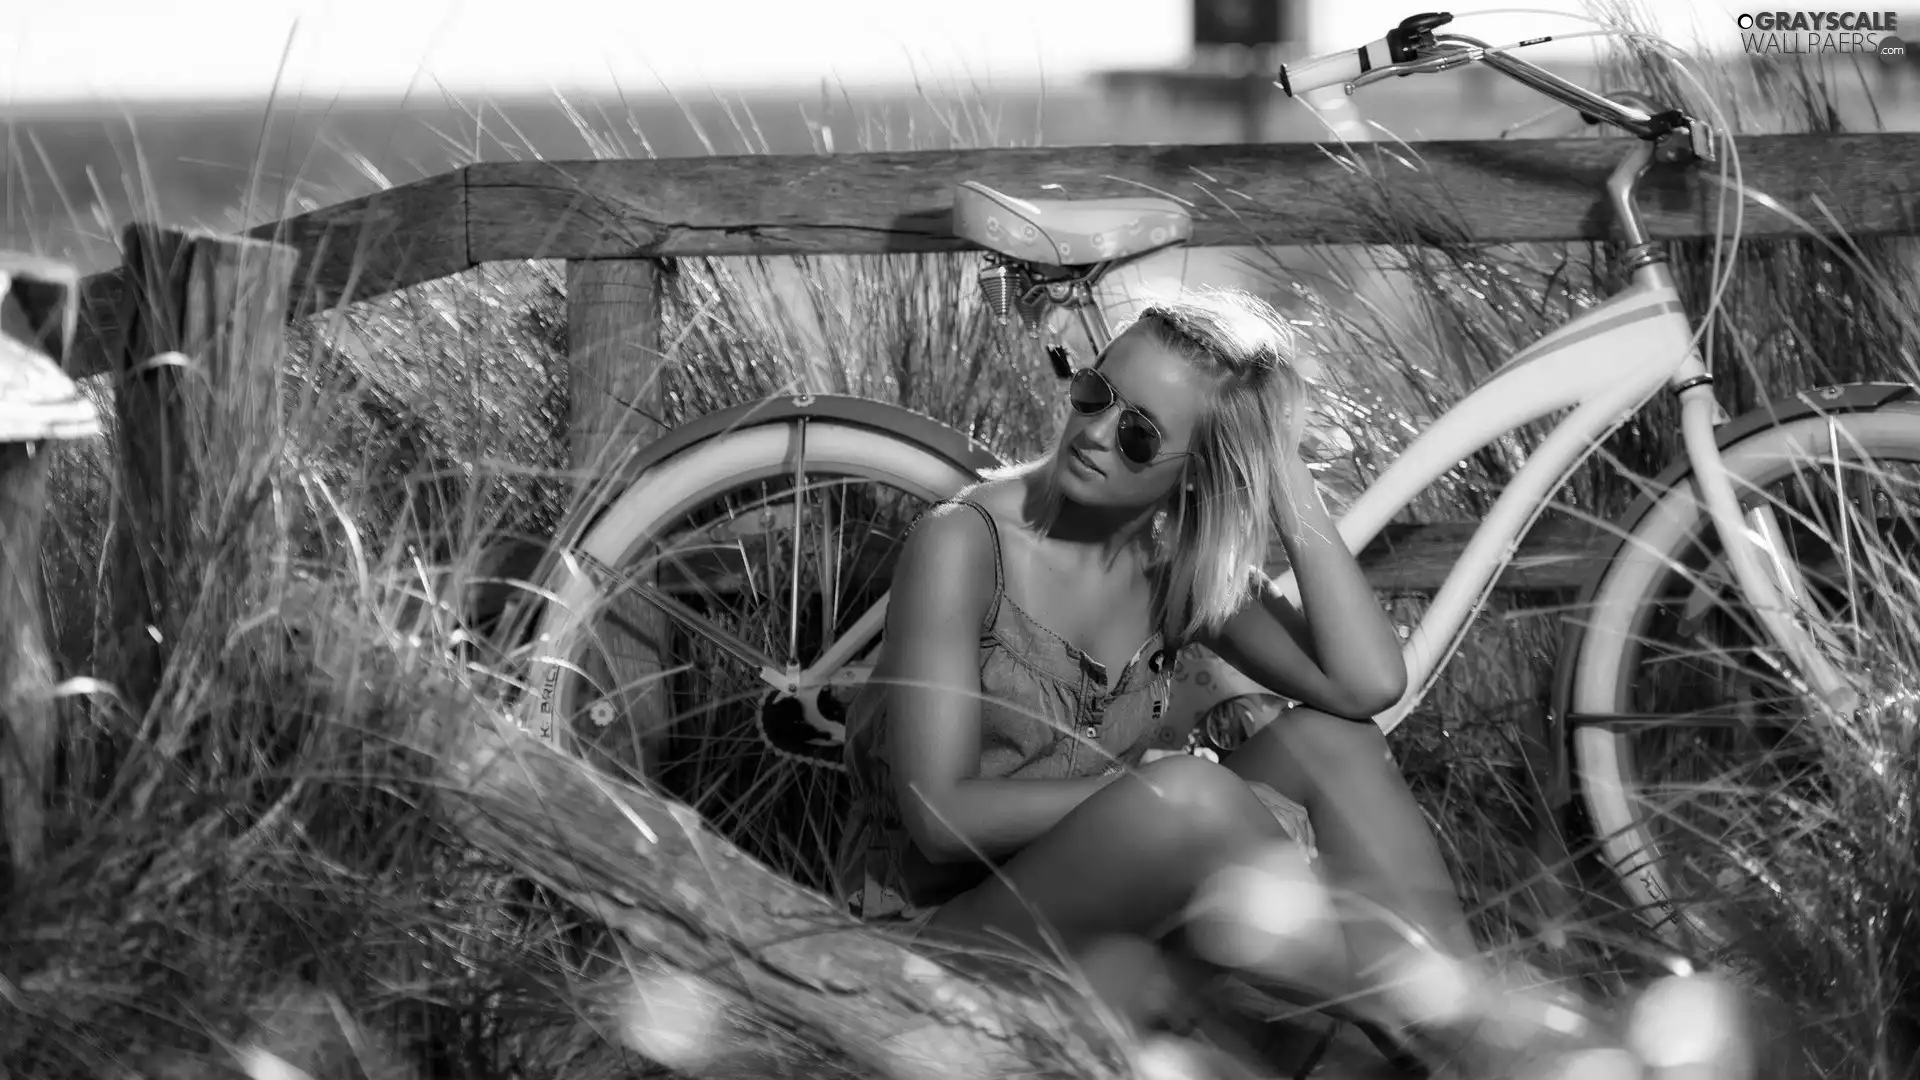 Bike, Blonde, grass, Glasses, fence, Women